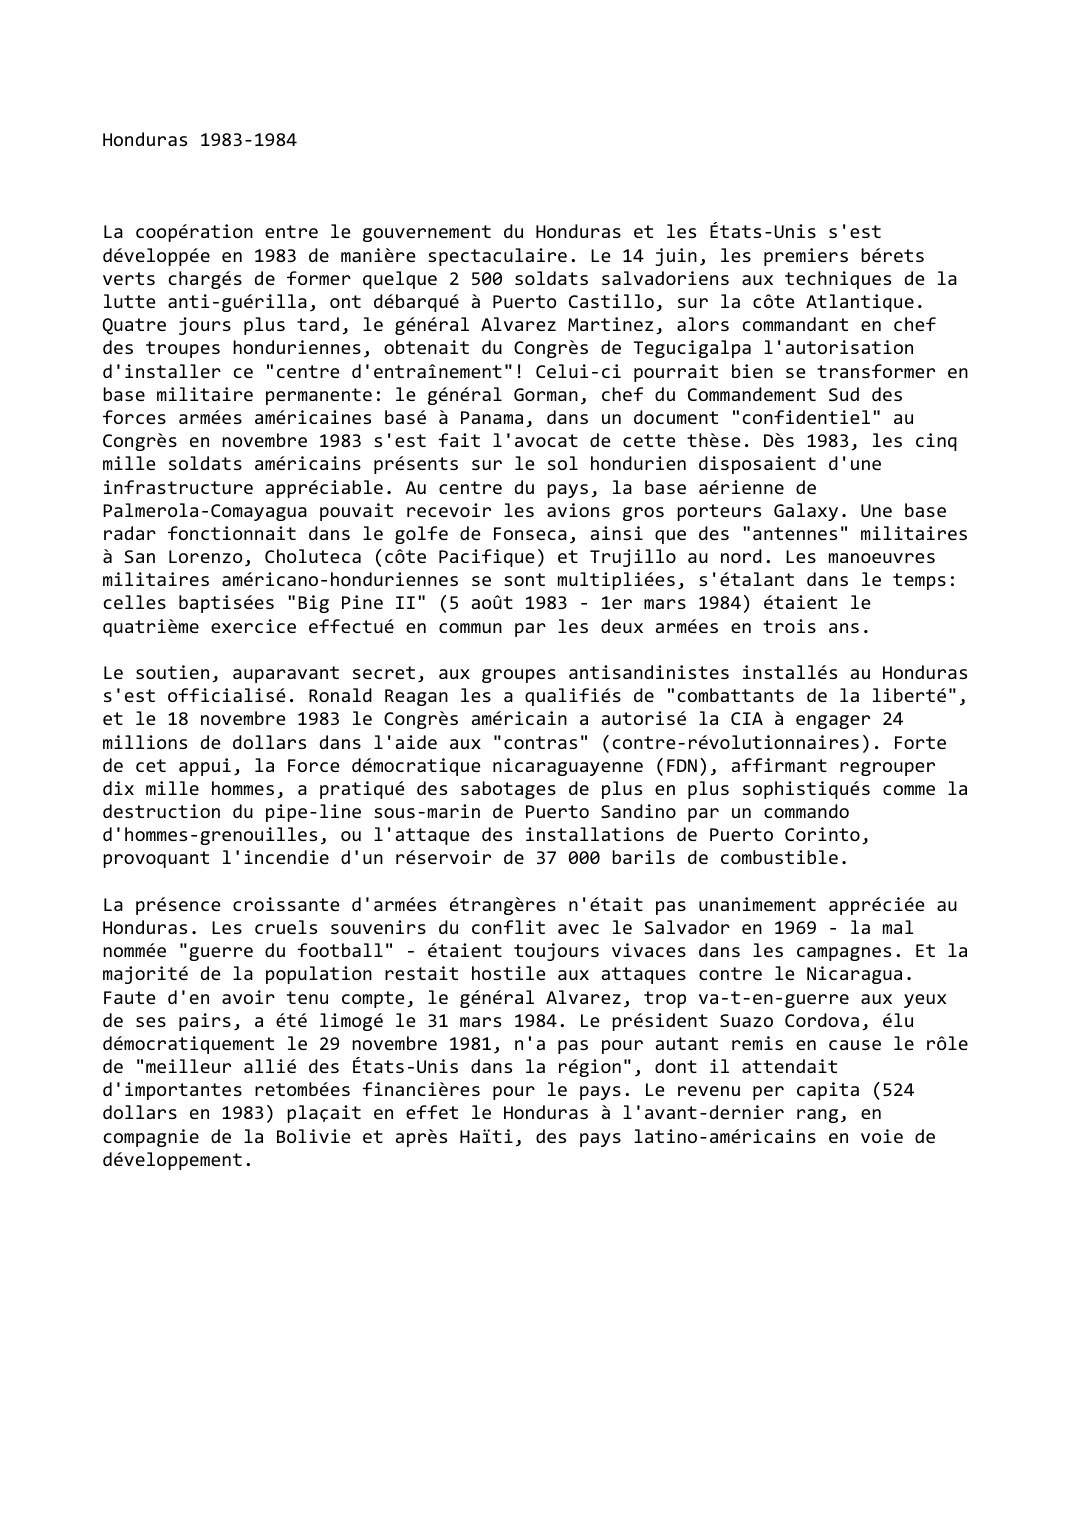 Prévisualisation du document Honduras (1983-1984)